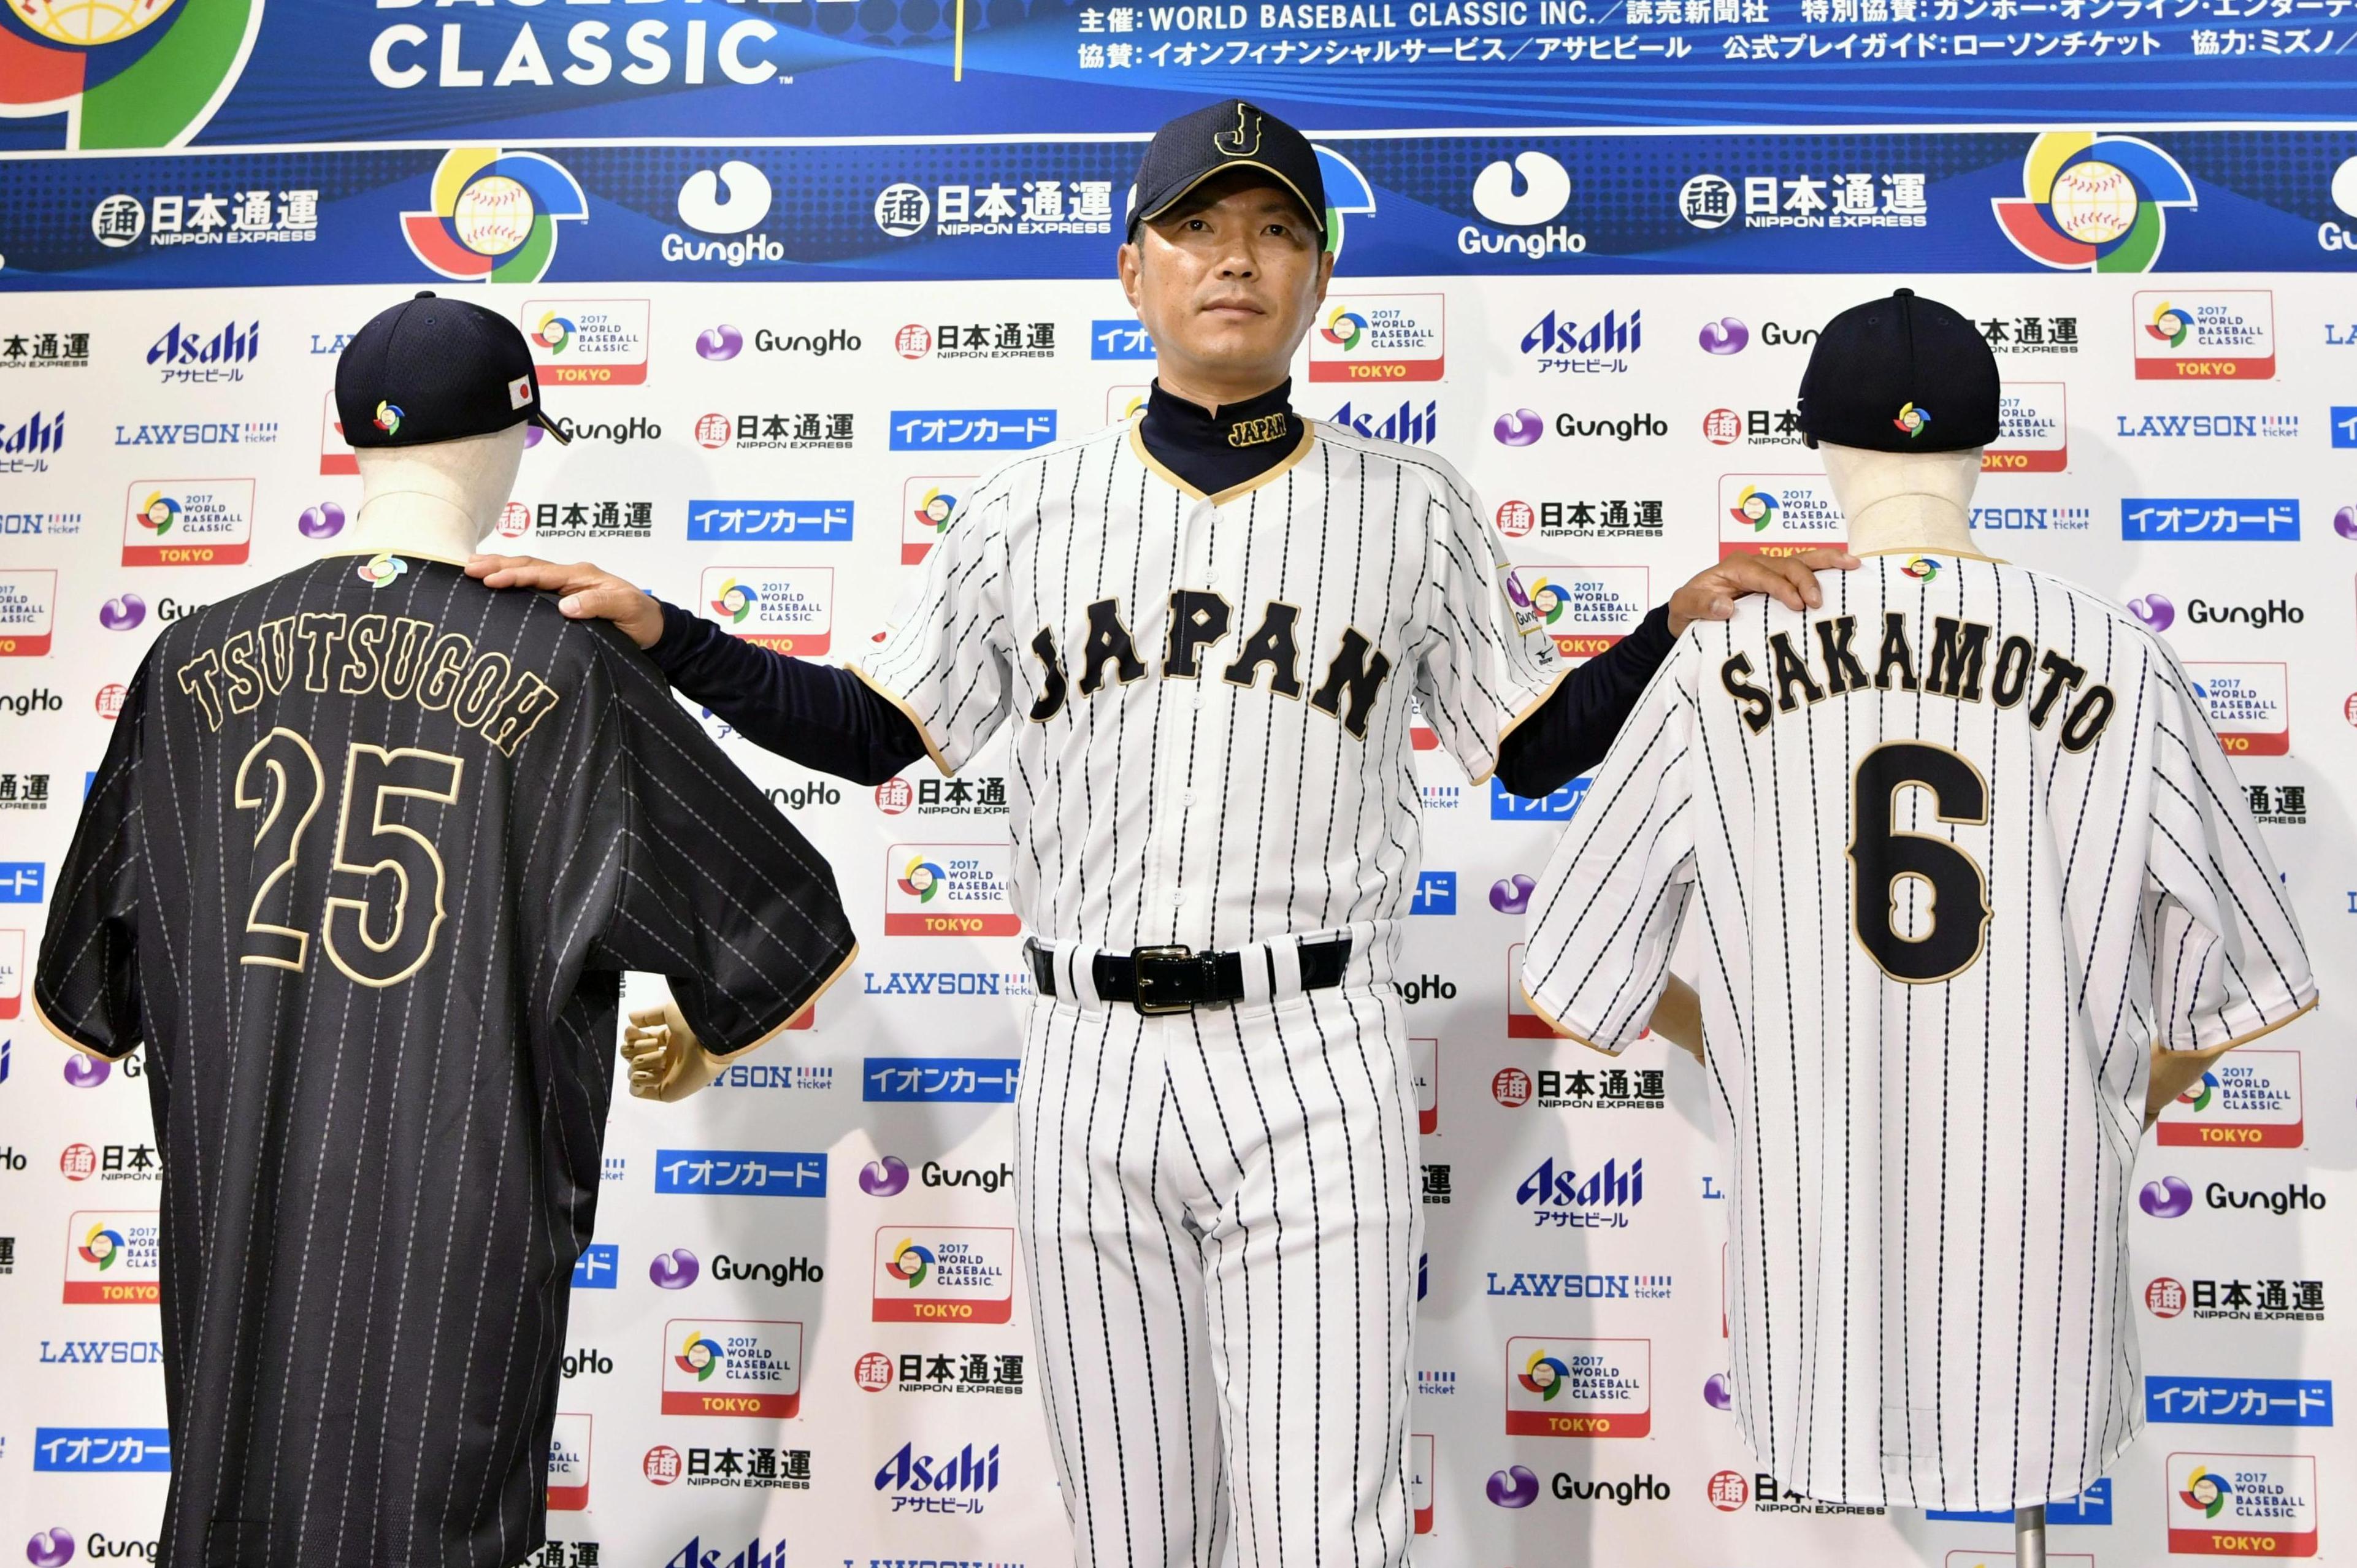 Samurai Japan skipper Kokubo promotes team's new uniforms for WBC